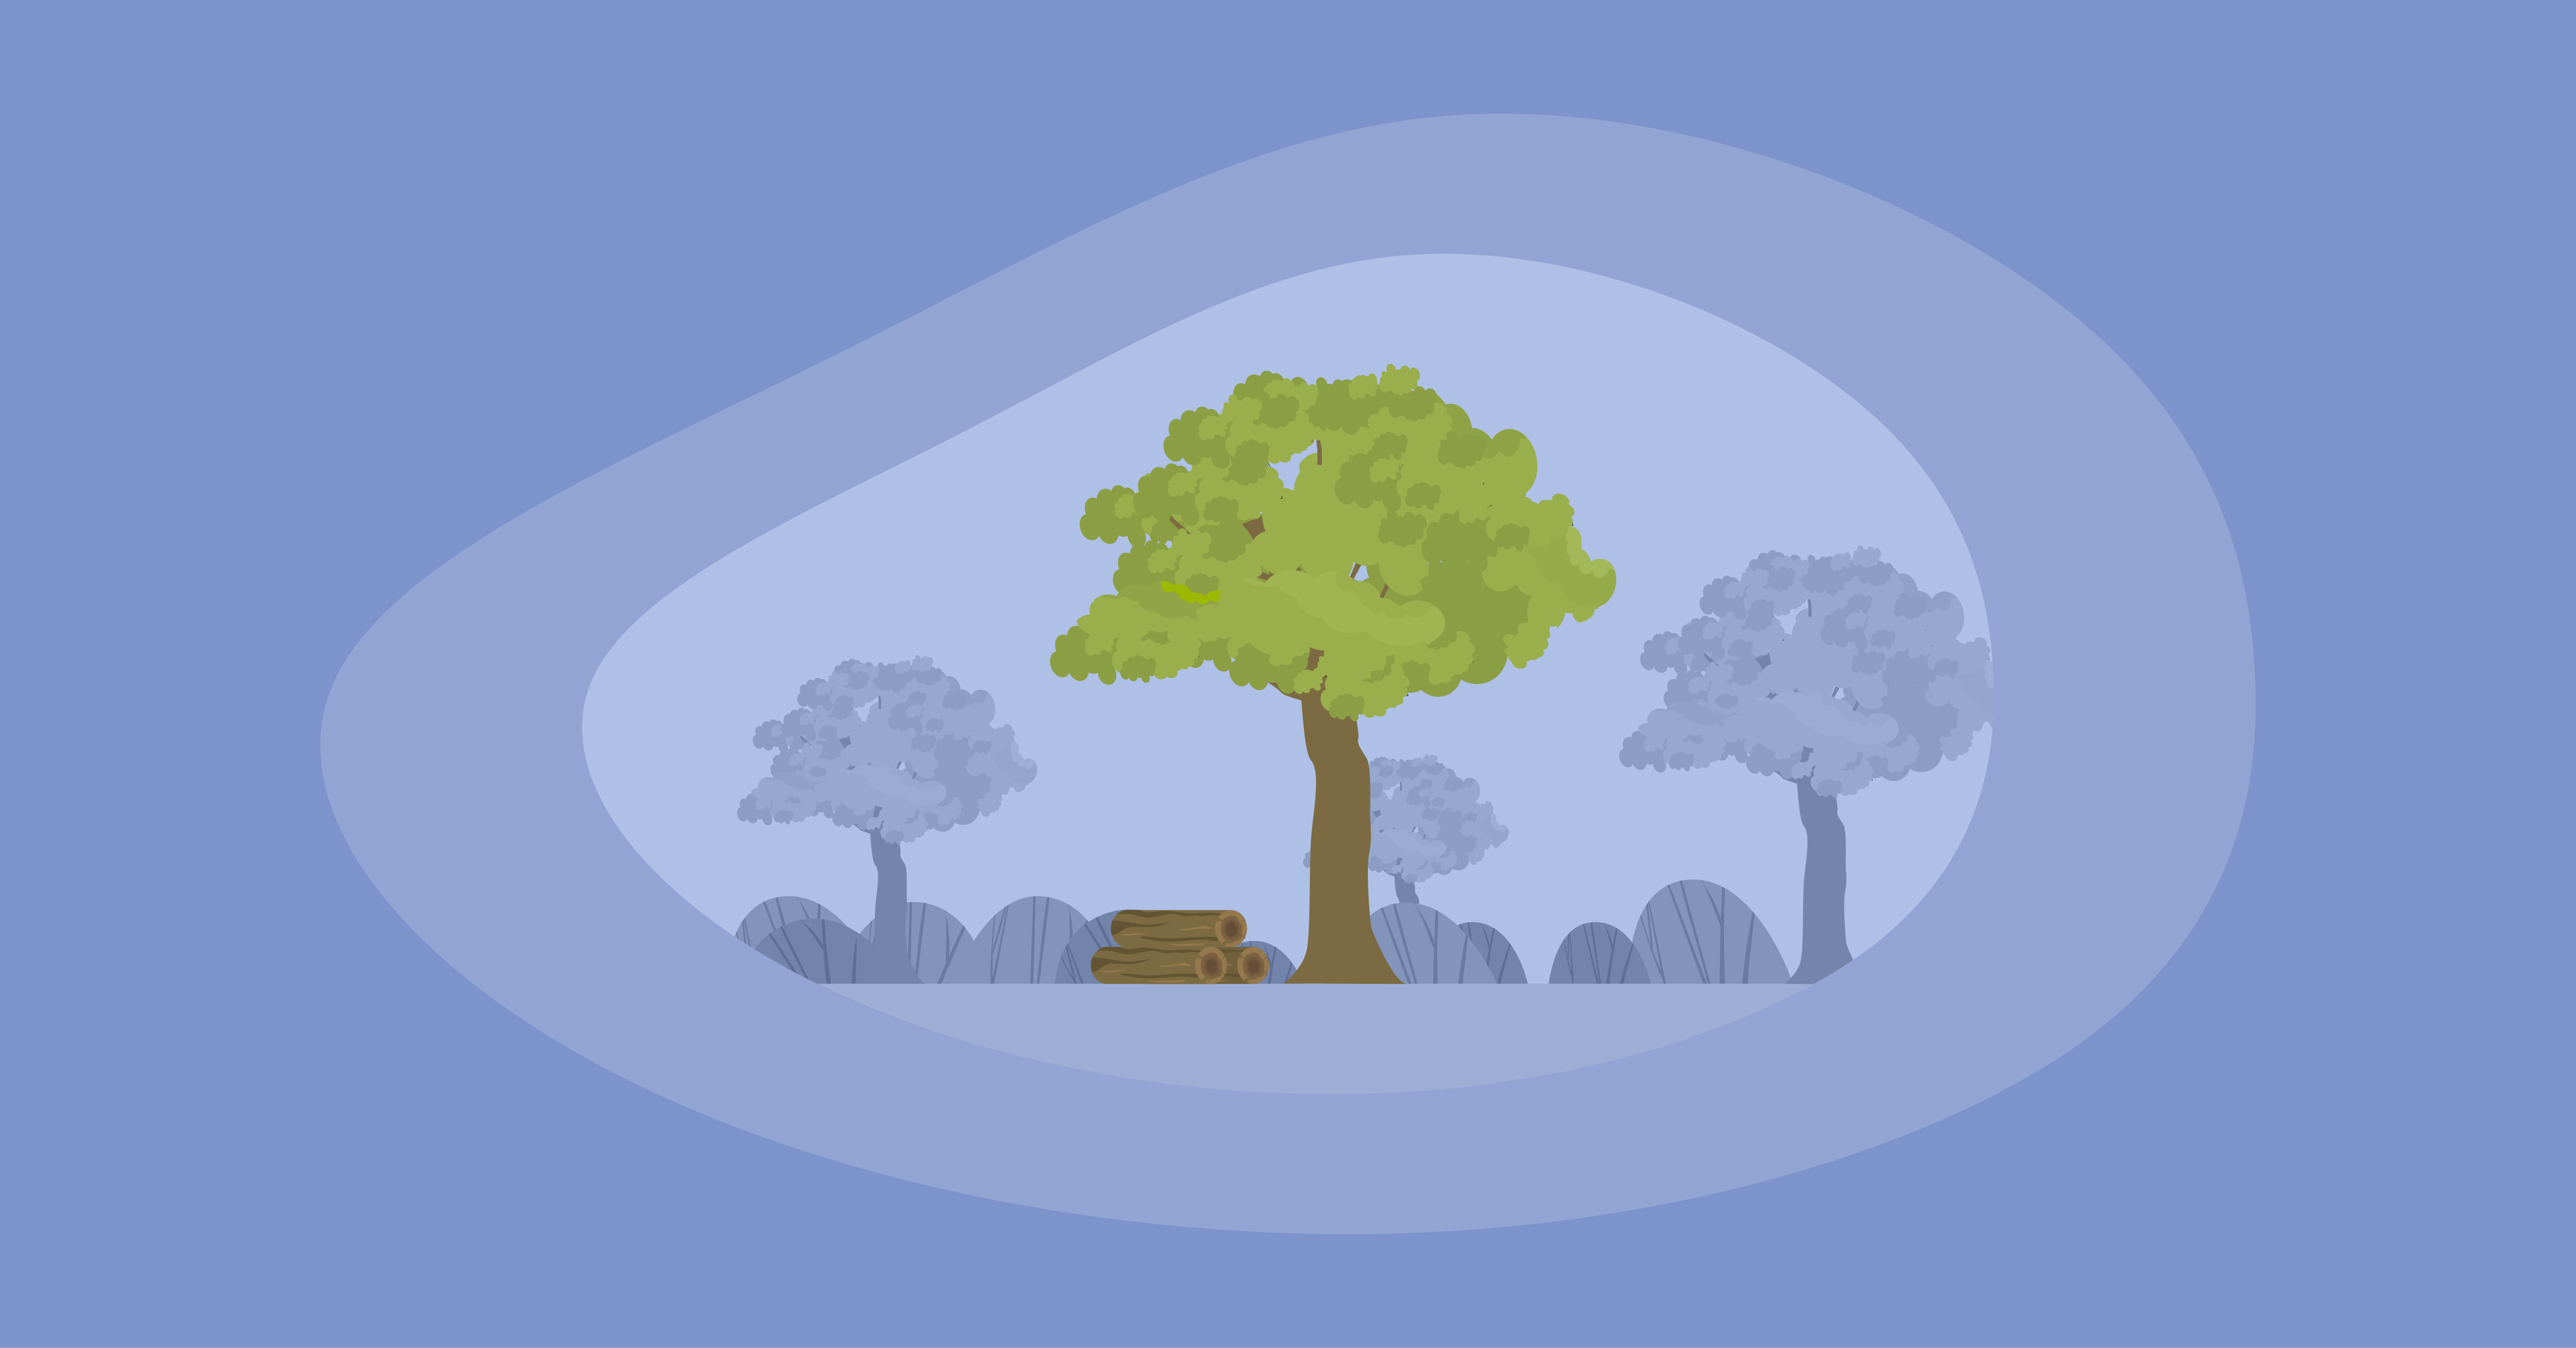 Illustration of a batu tree and wood